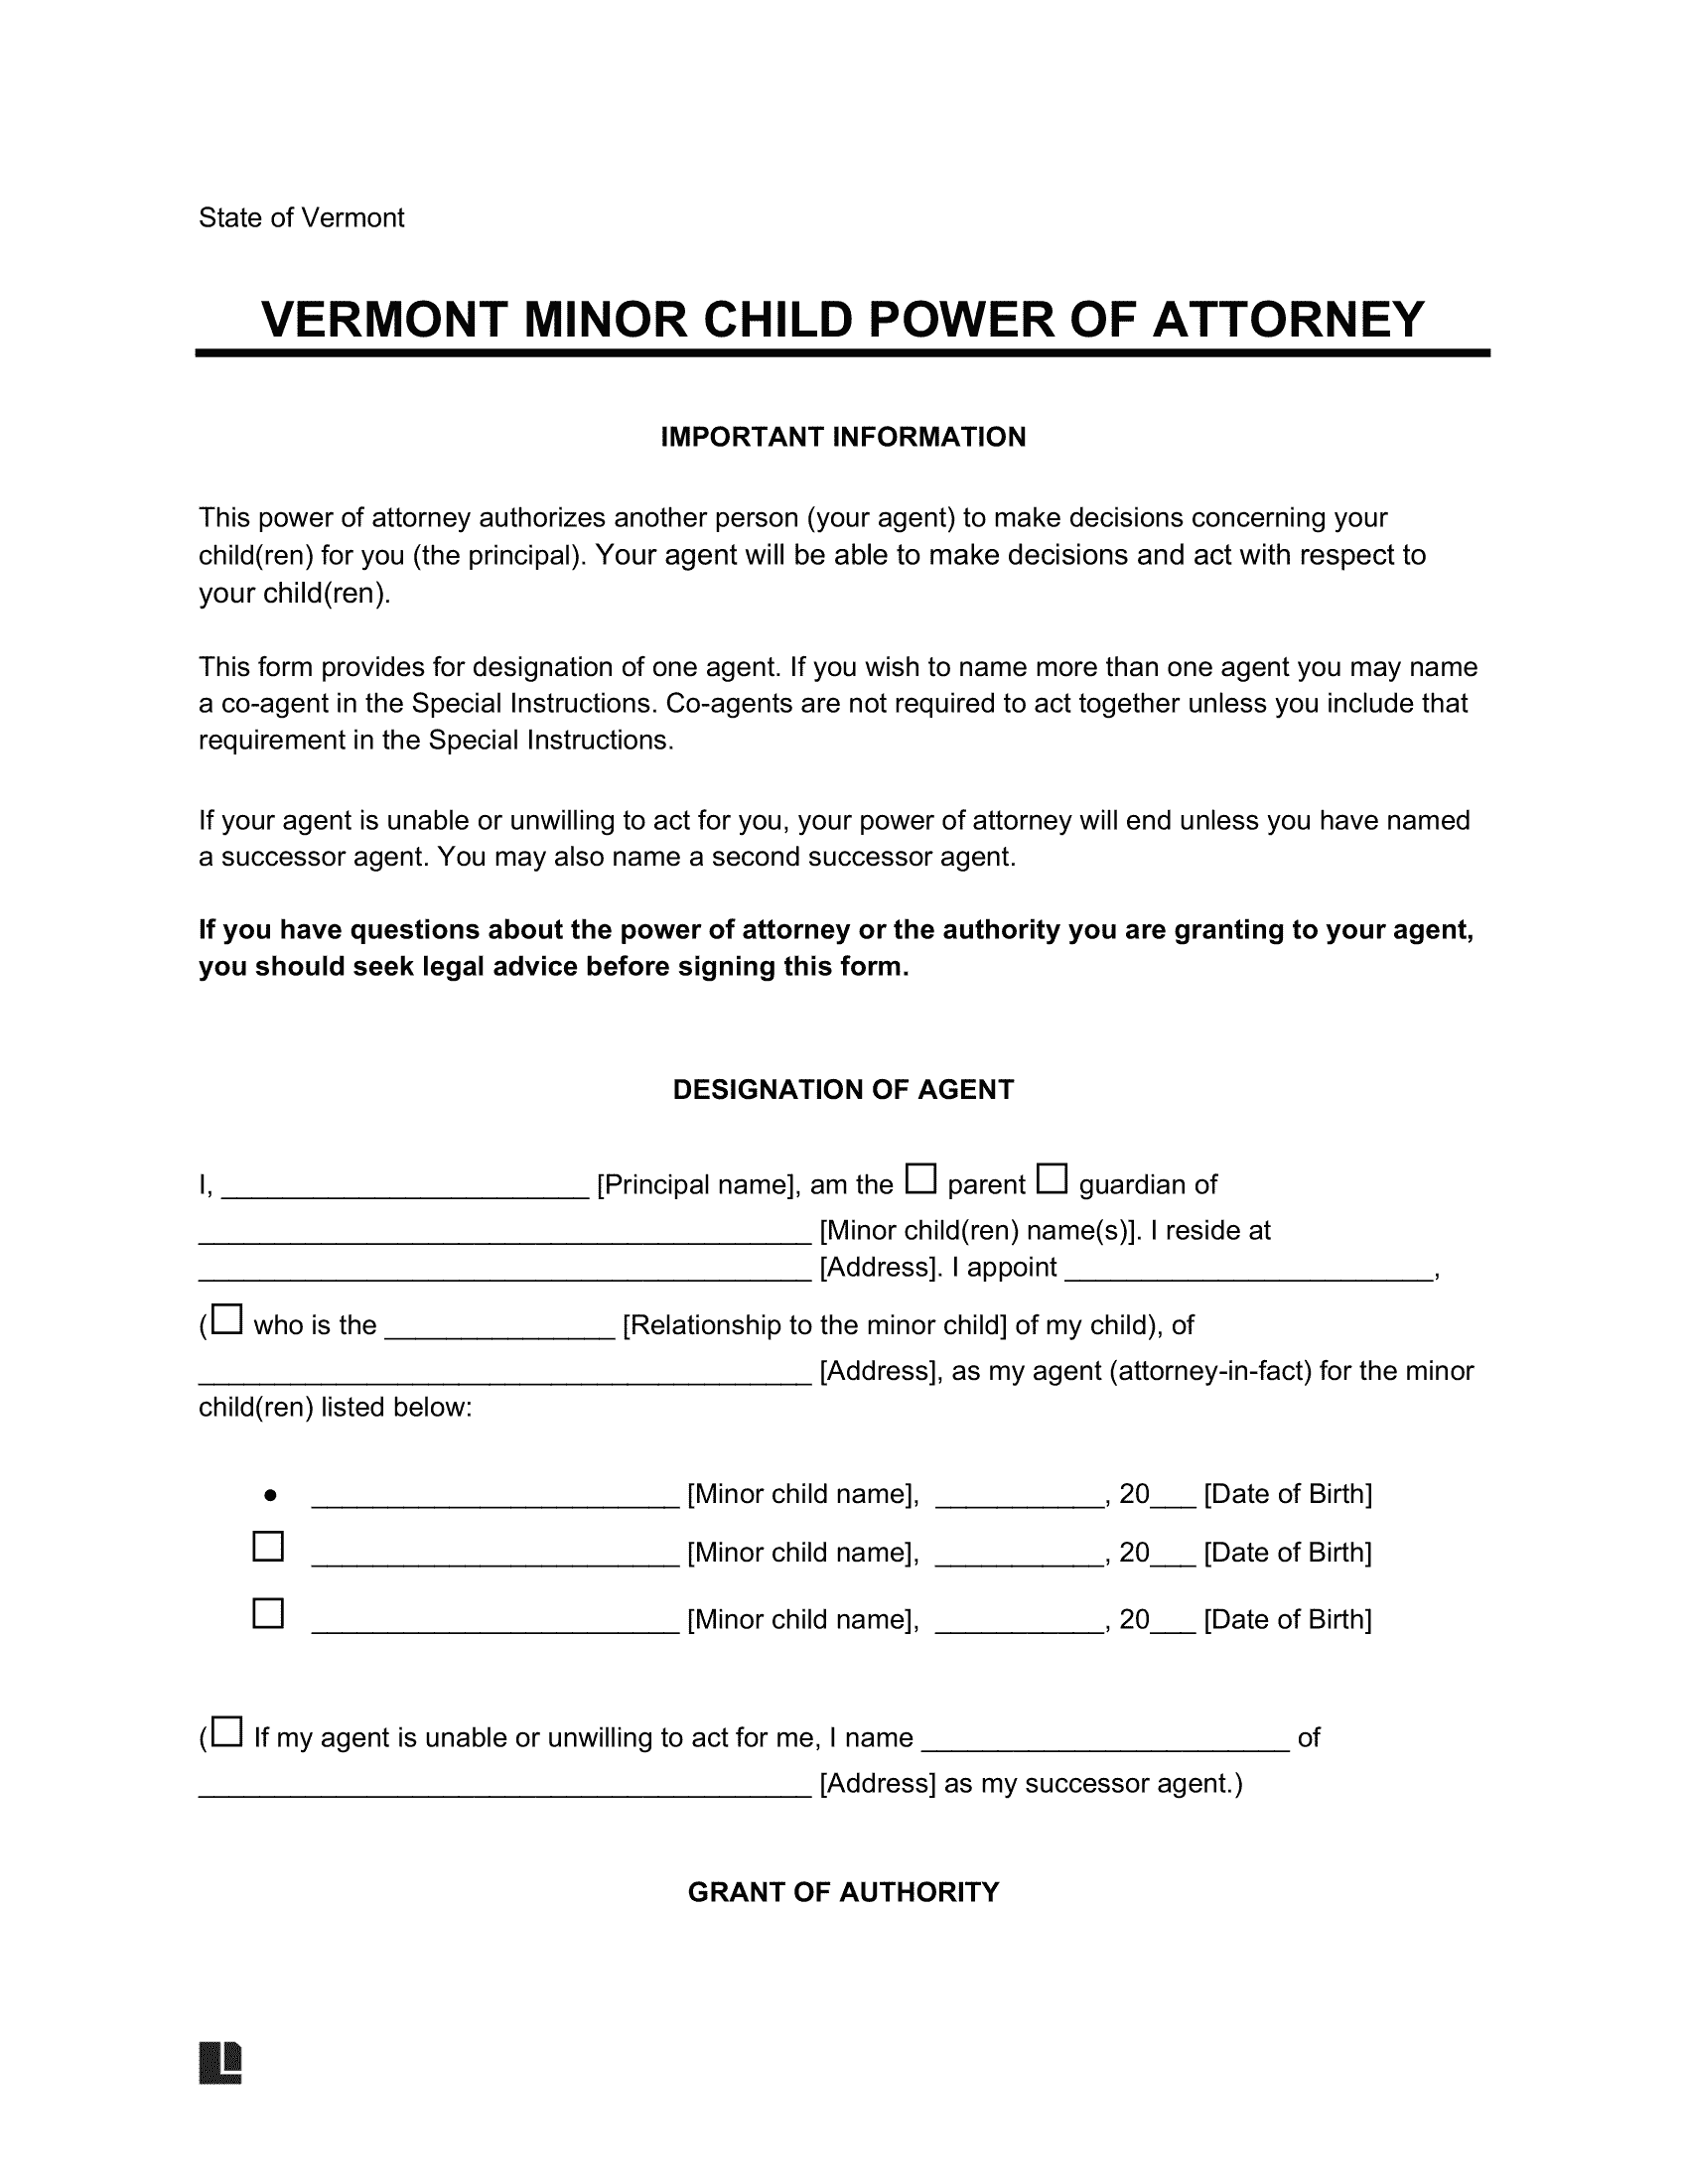 Vermont Minor Child Power of Attorney Form